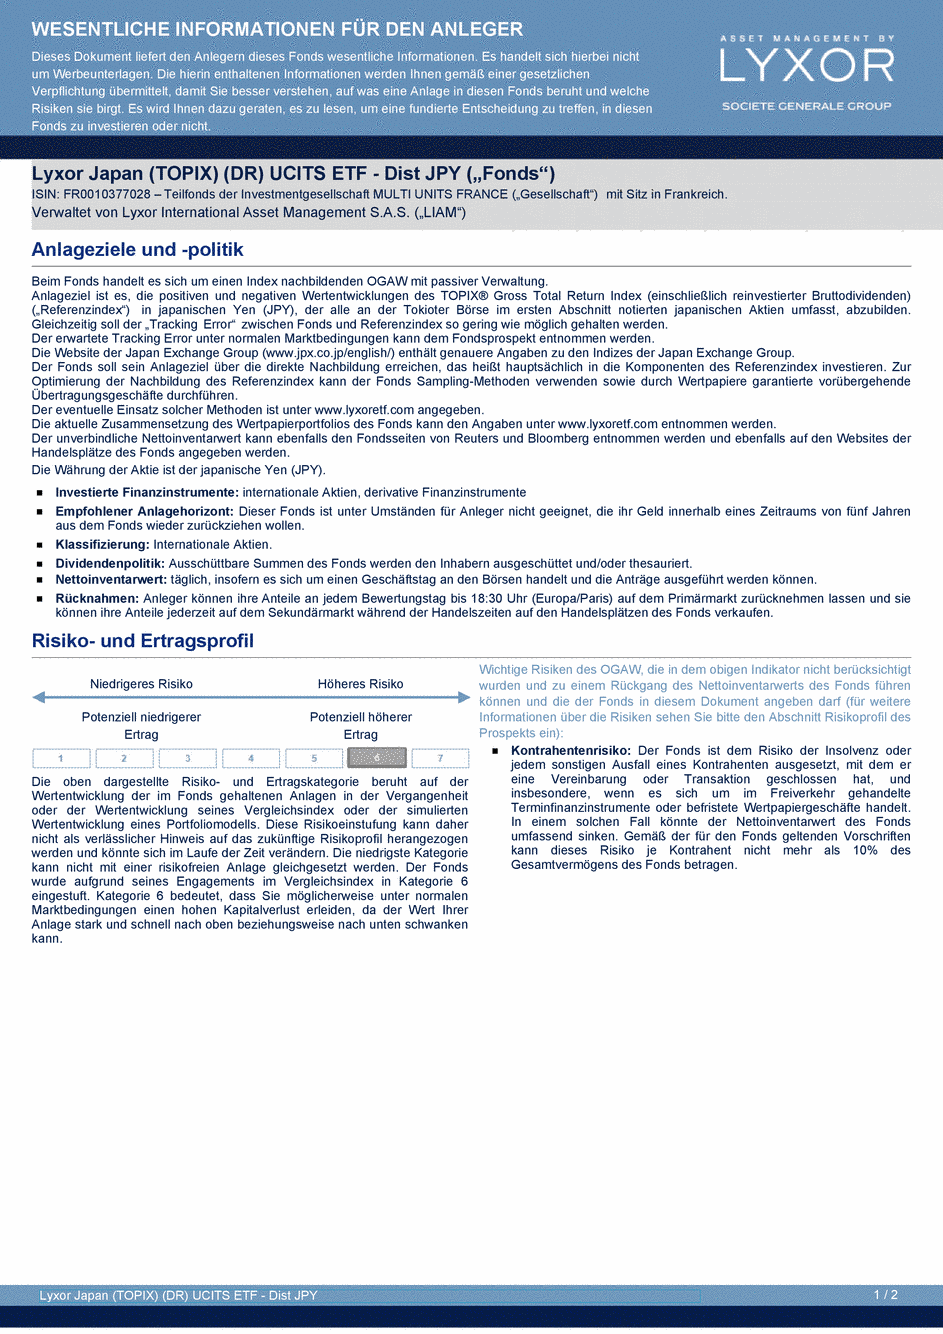 DICI Lyxor Japan (TOPIX) (DR) UCITS ETF - Dist JPY - 13/03/2020 - German